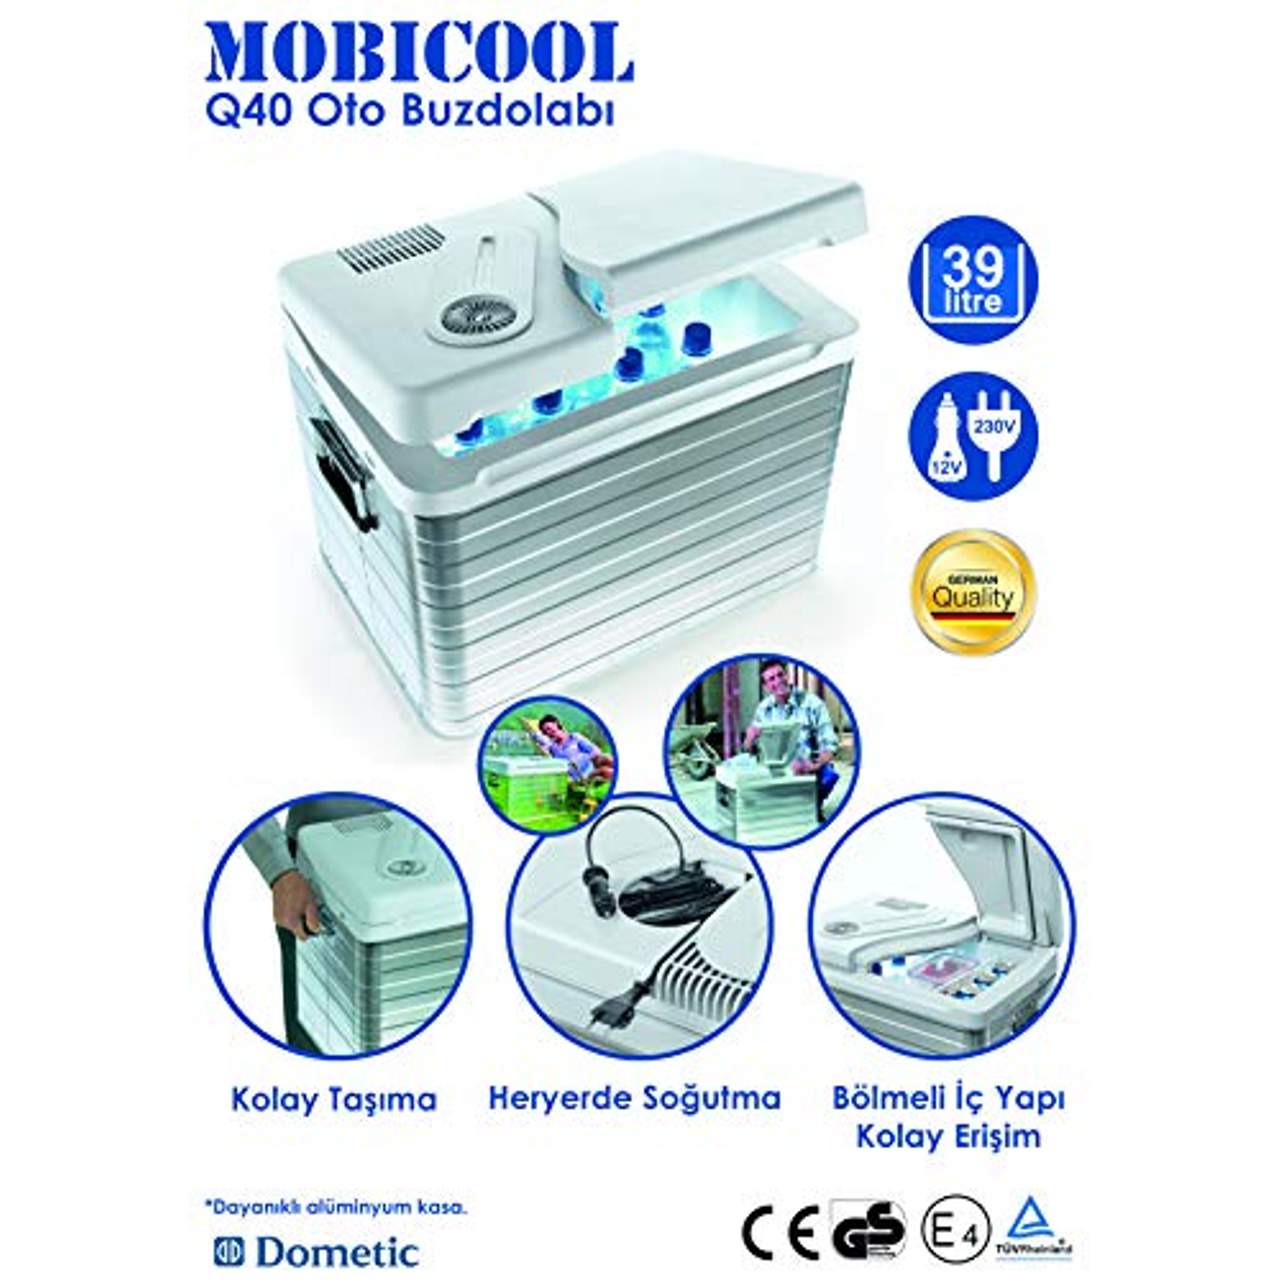 Mobicool Q40 AC DC tragbare thermo-elektrische Alu-Kühlbox